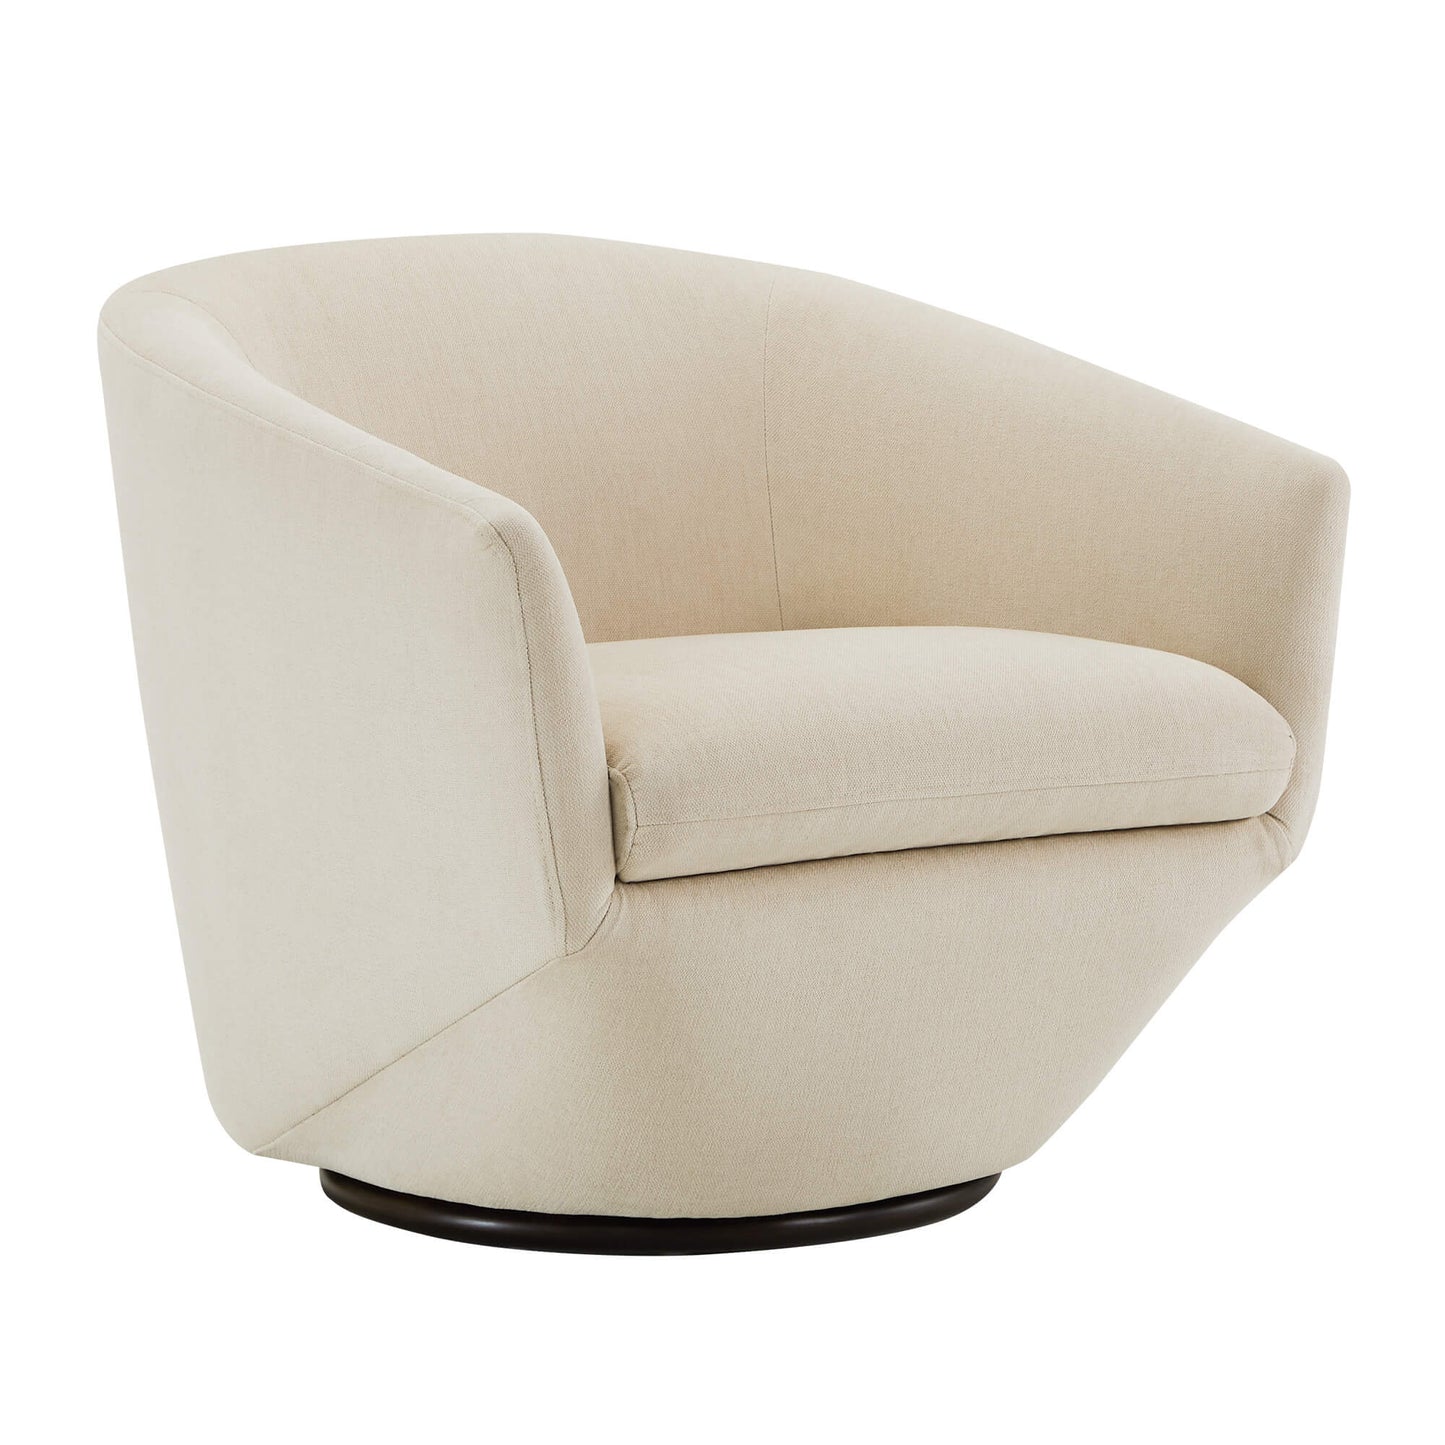 CHITA LIVING-Aria Swivel Arm Accent Chair-Accent Chair-Velvet-Cream-